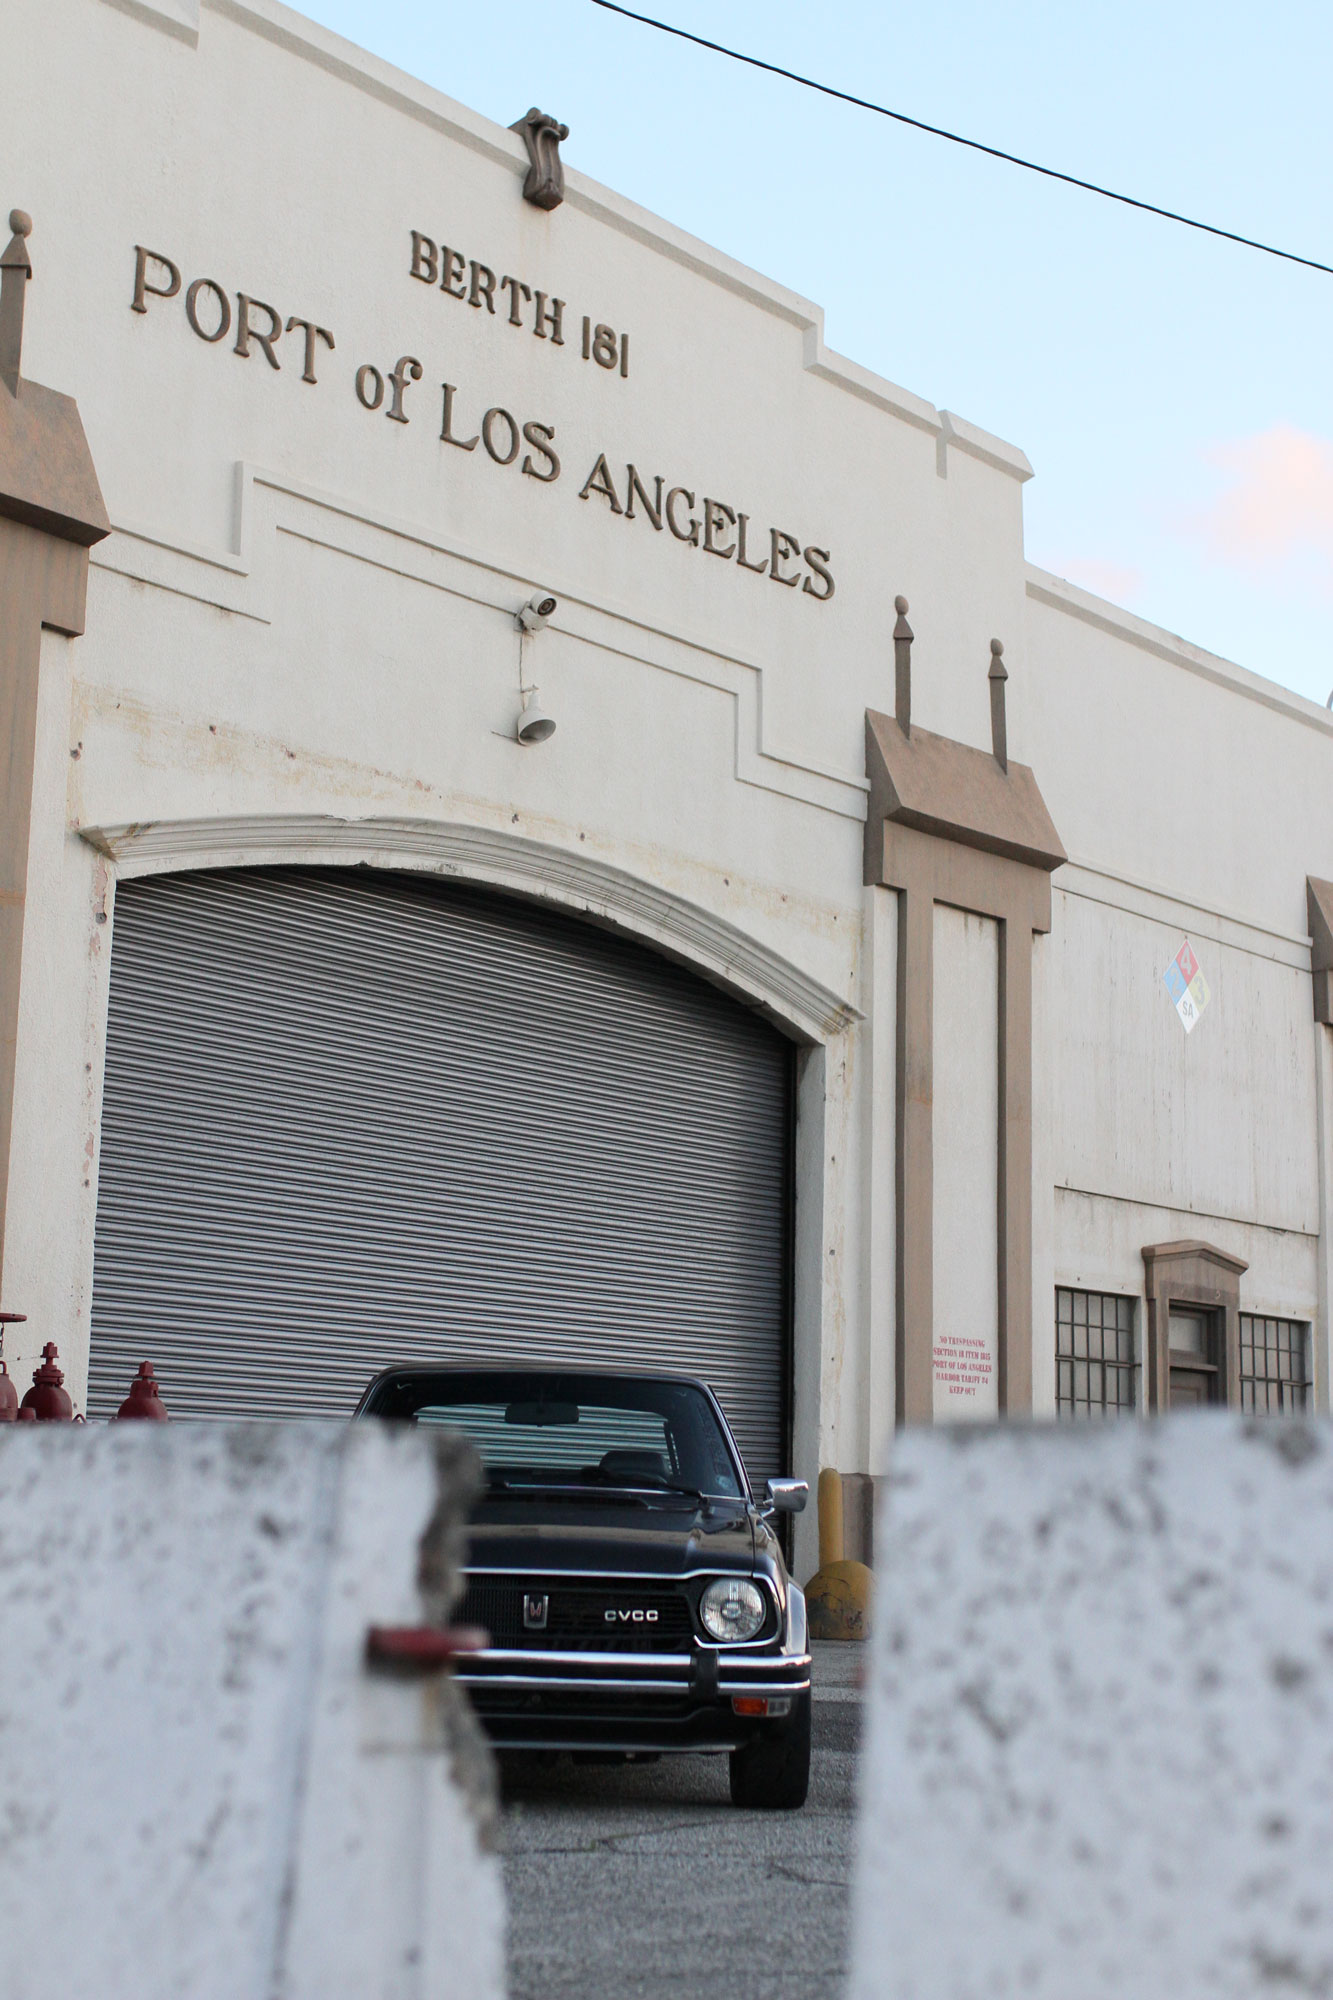 Honda Civic infront of Port Los Angeles 